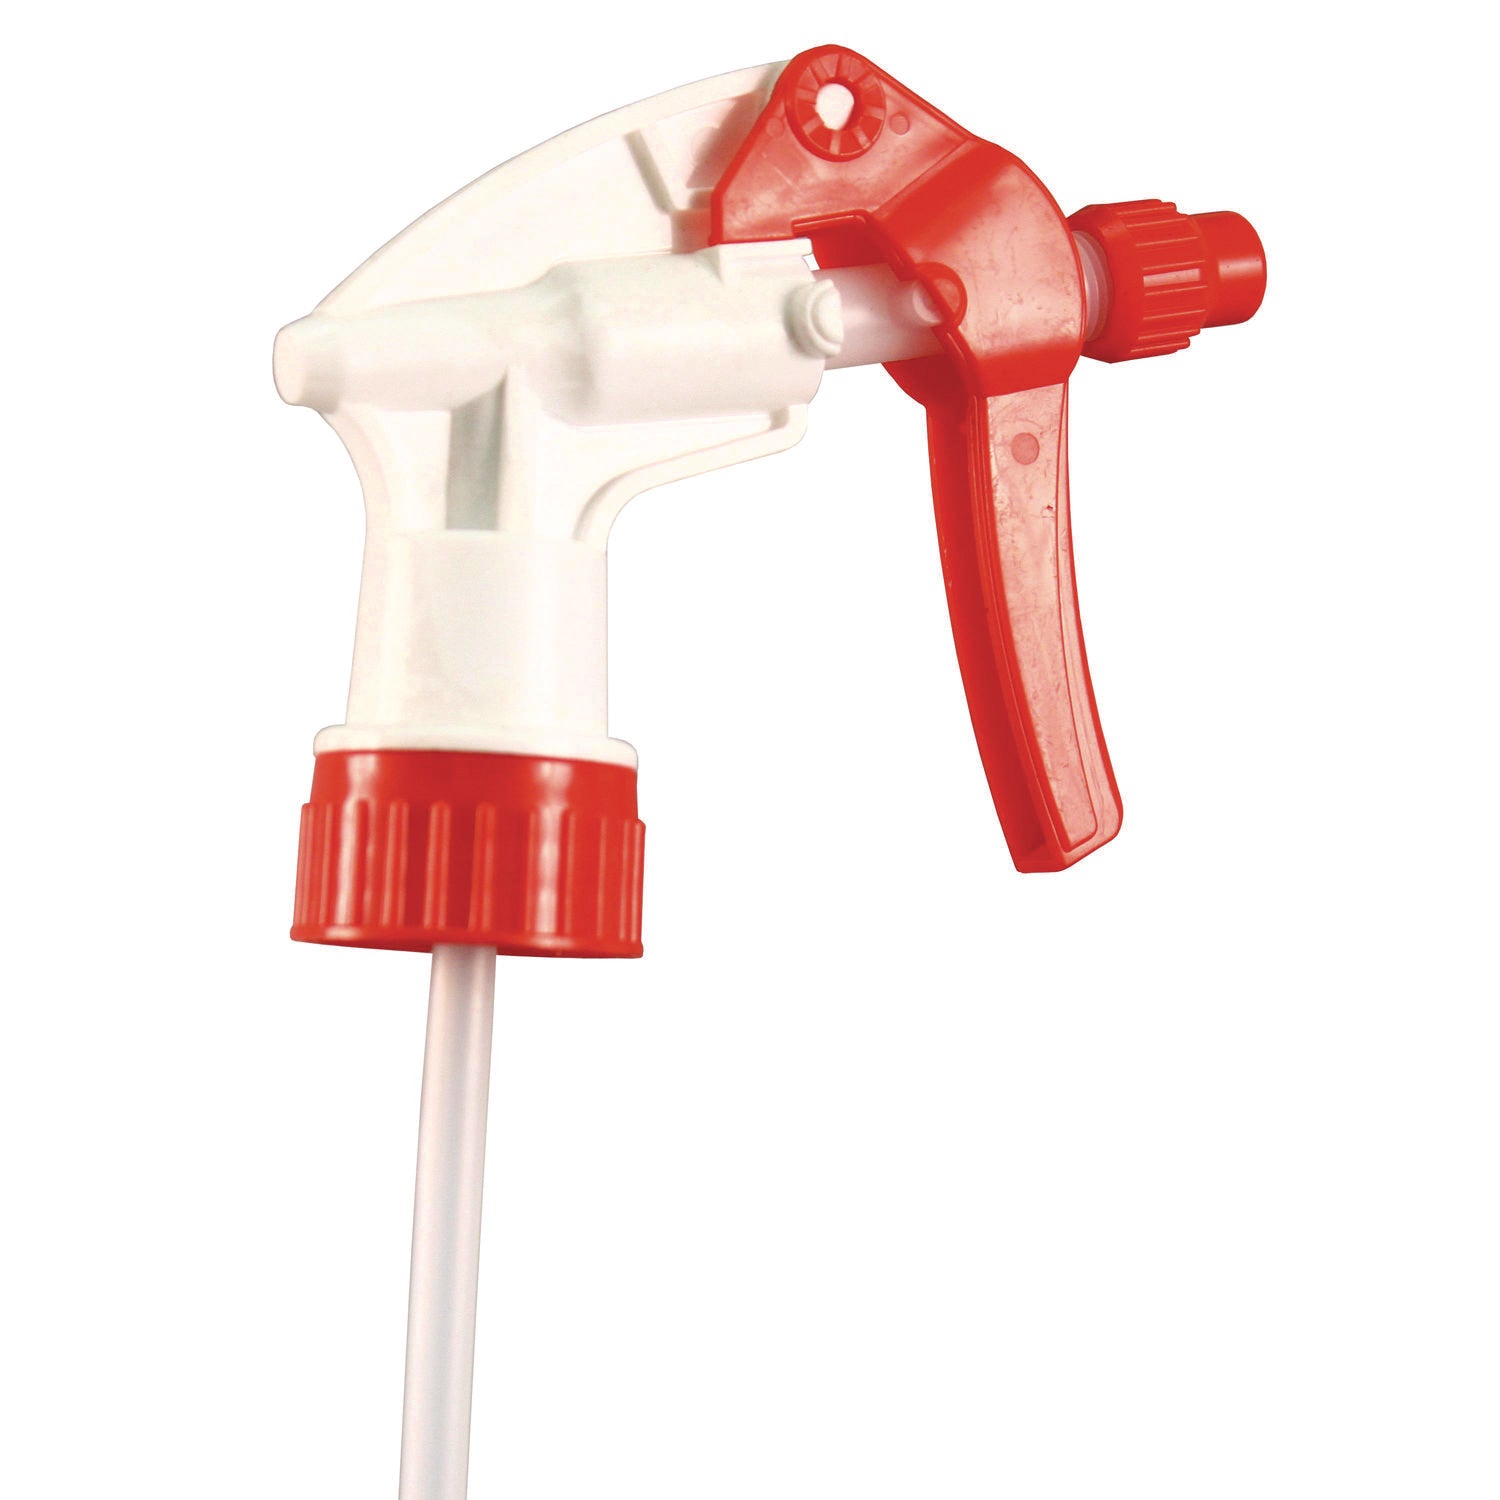 general-purpose-trigger-sprayer-988-tube-fits-32-oz-bottles-red-white-24-carton_imp59062491 - 2